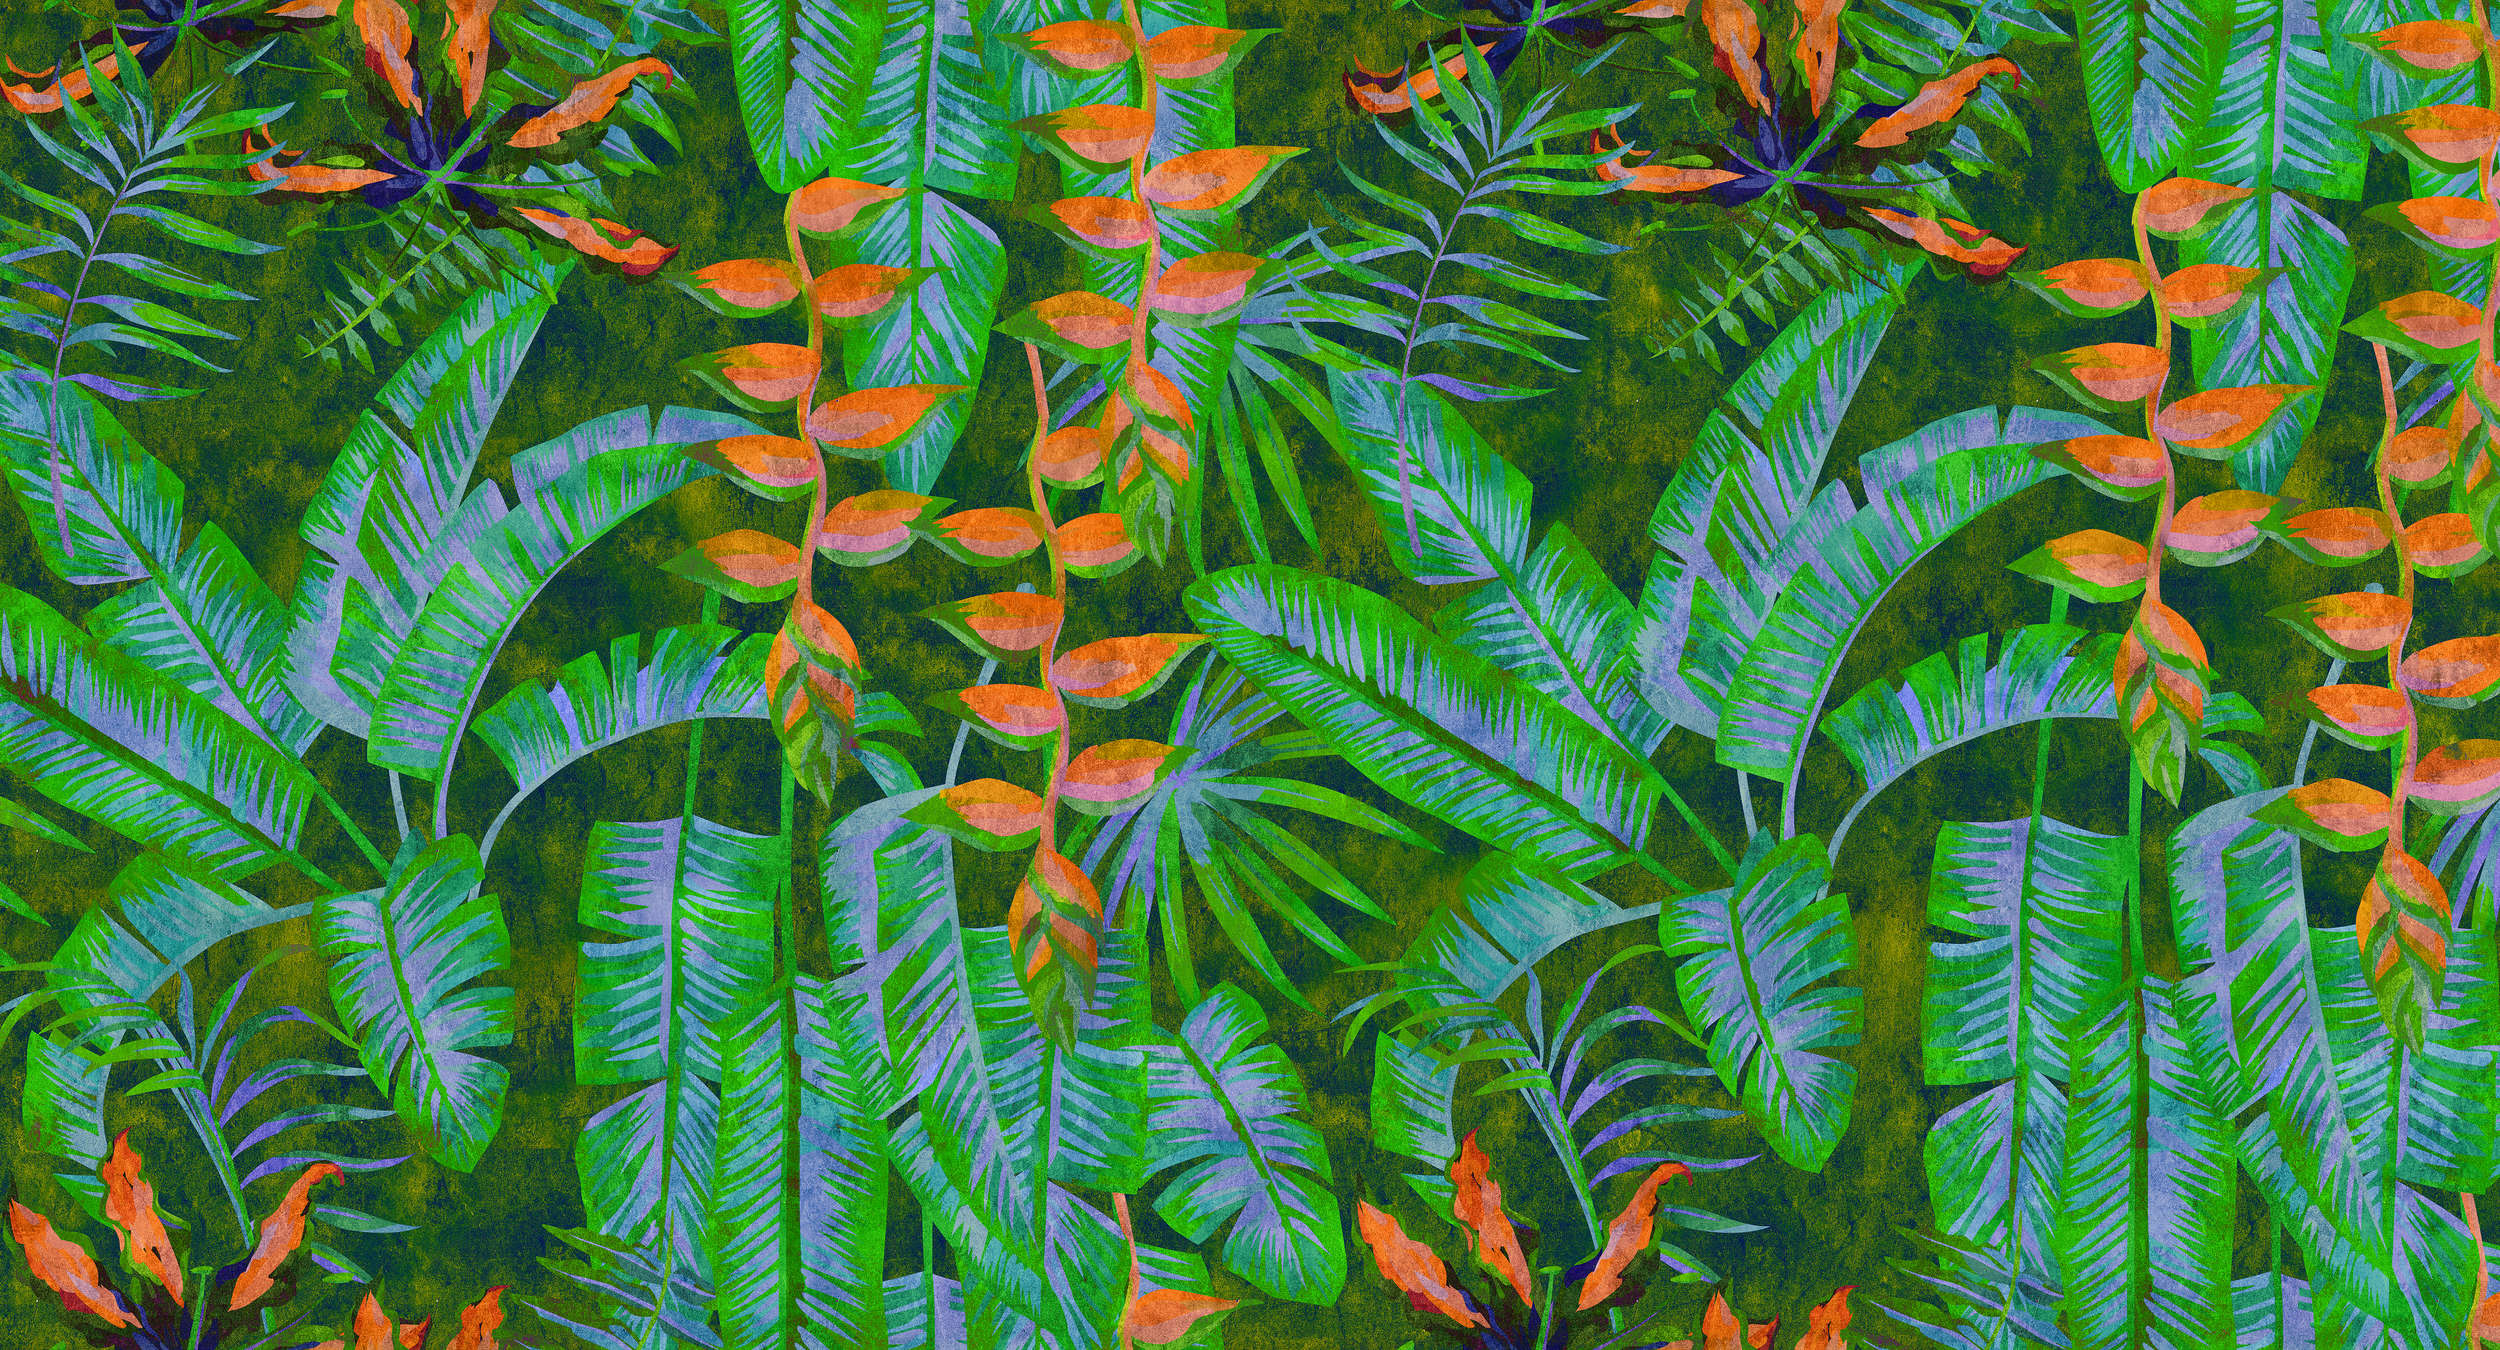             Tropicana 4 - Papel pintado selva de colores vivos - estructura de papel secante - Verde, Naranja | Vellón liso Premium
        